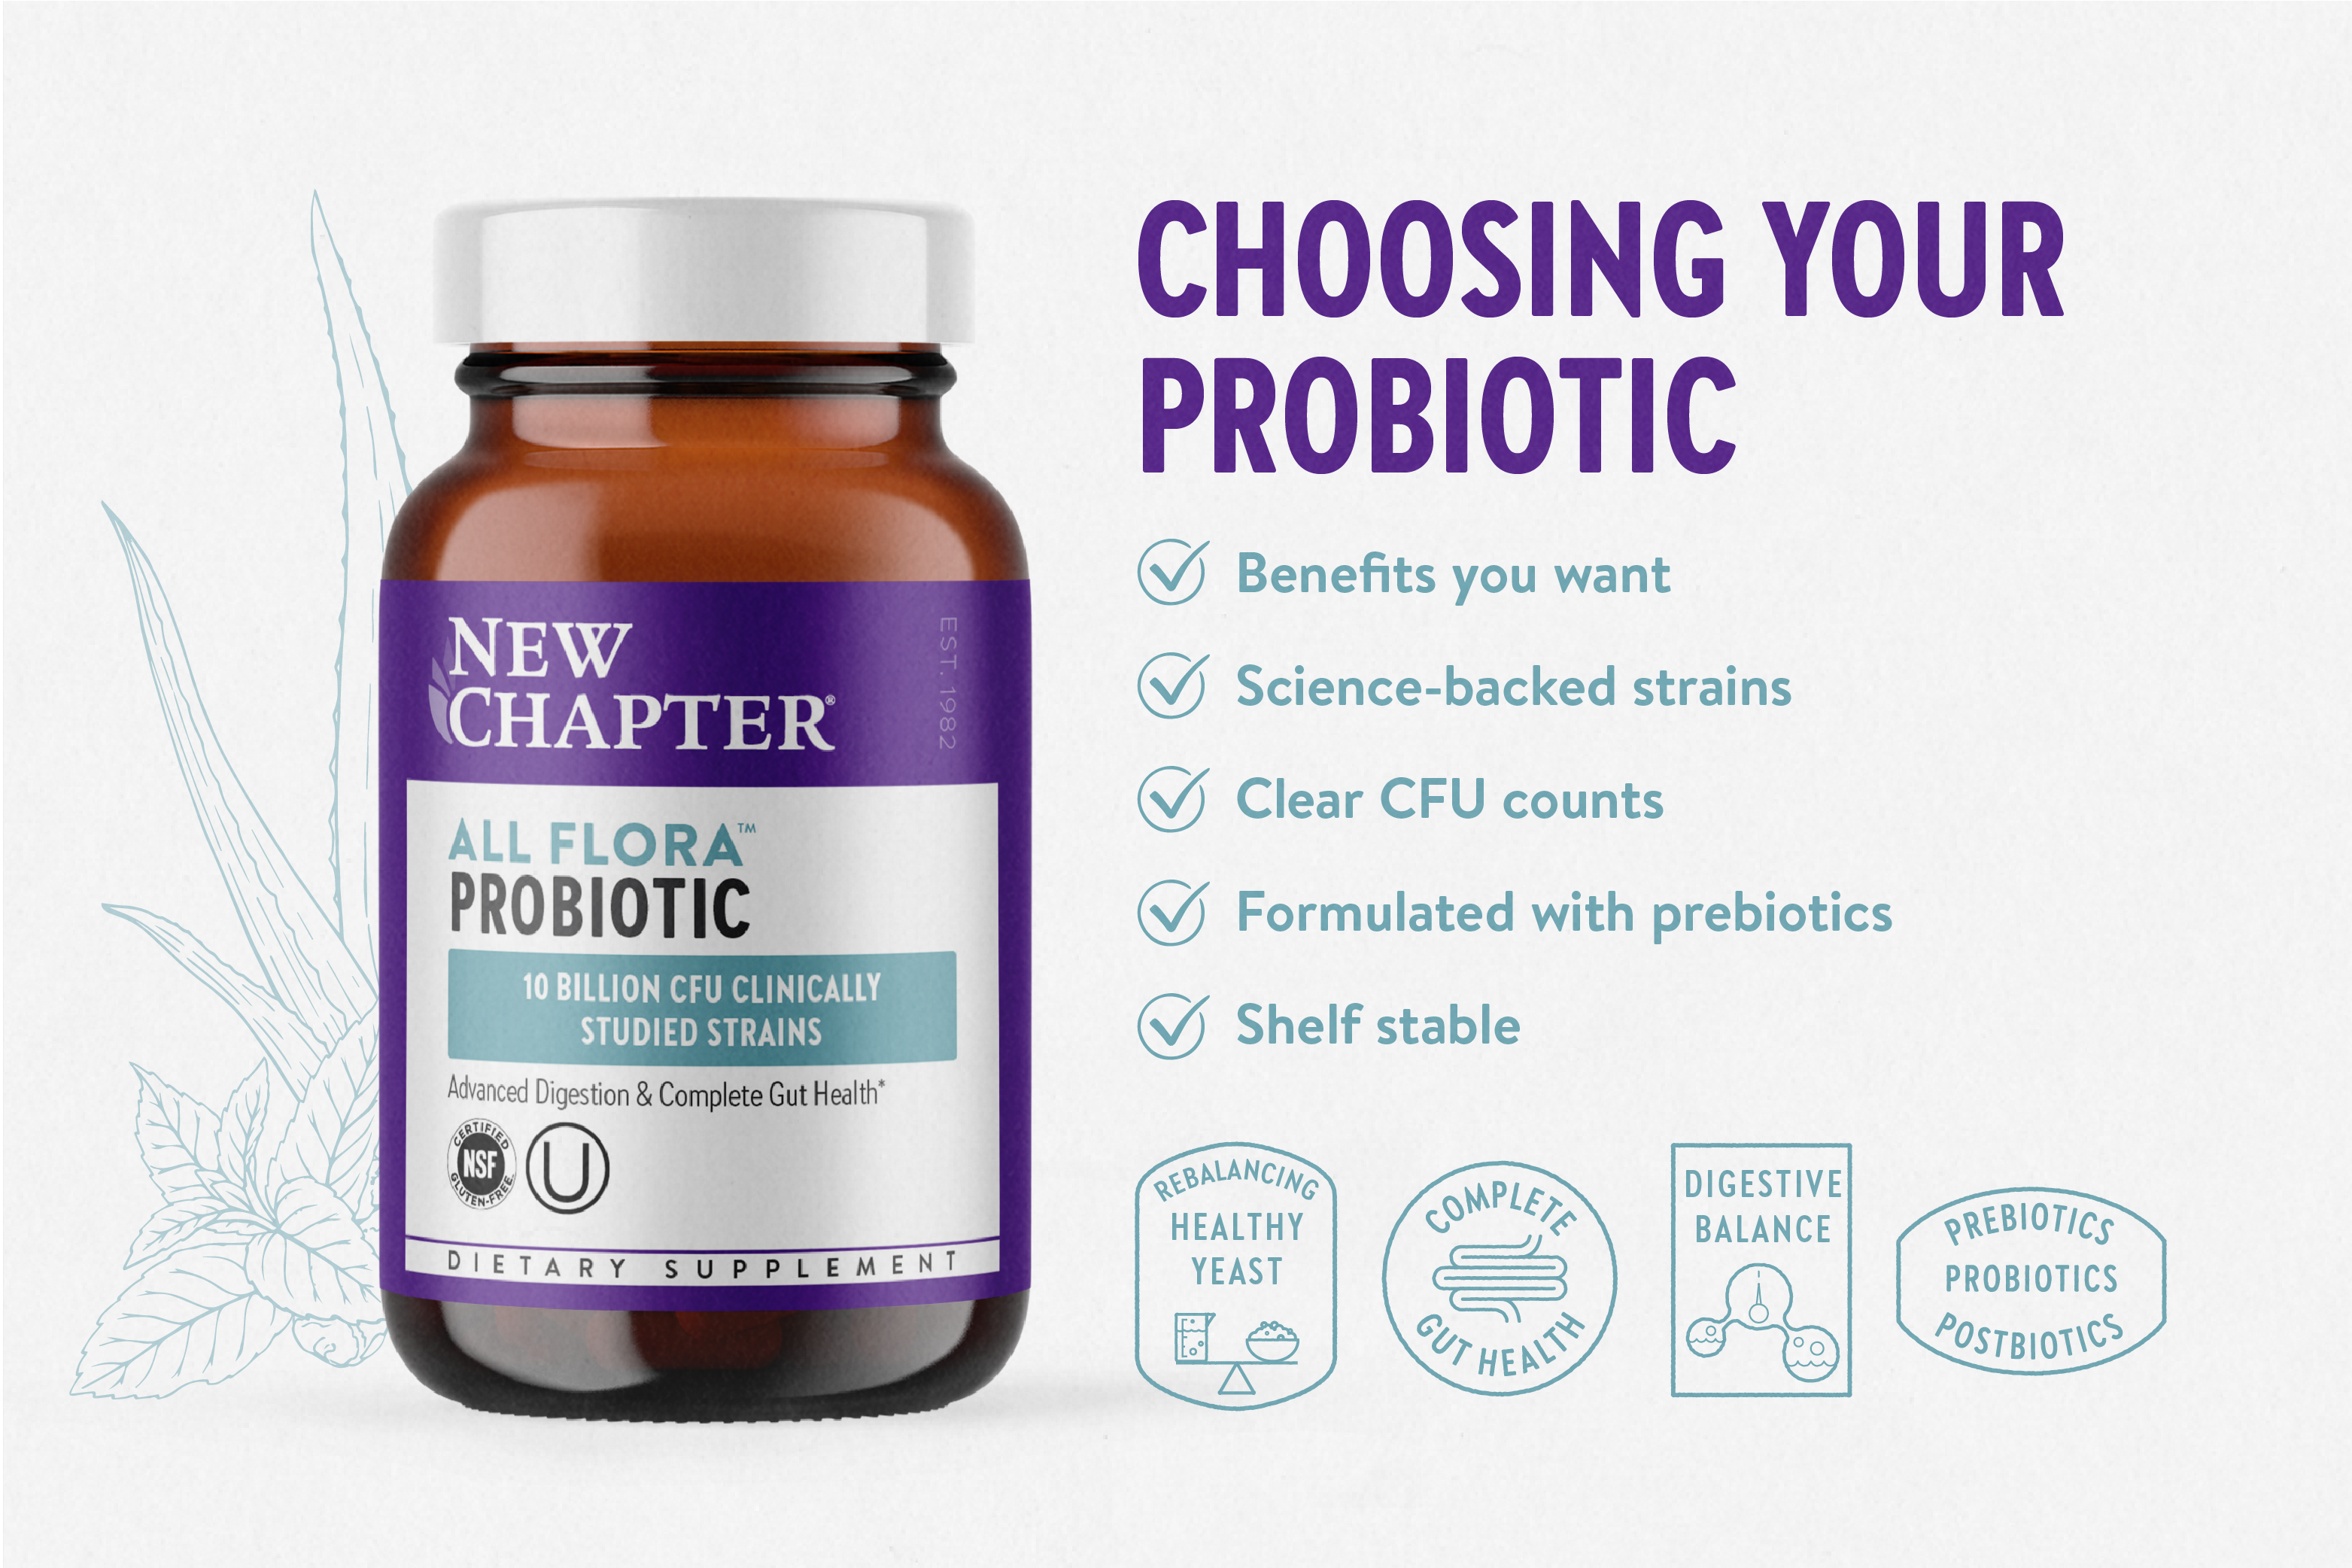 Choosing your probiotic